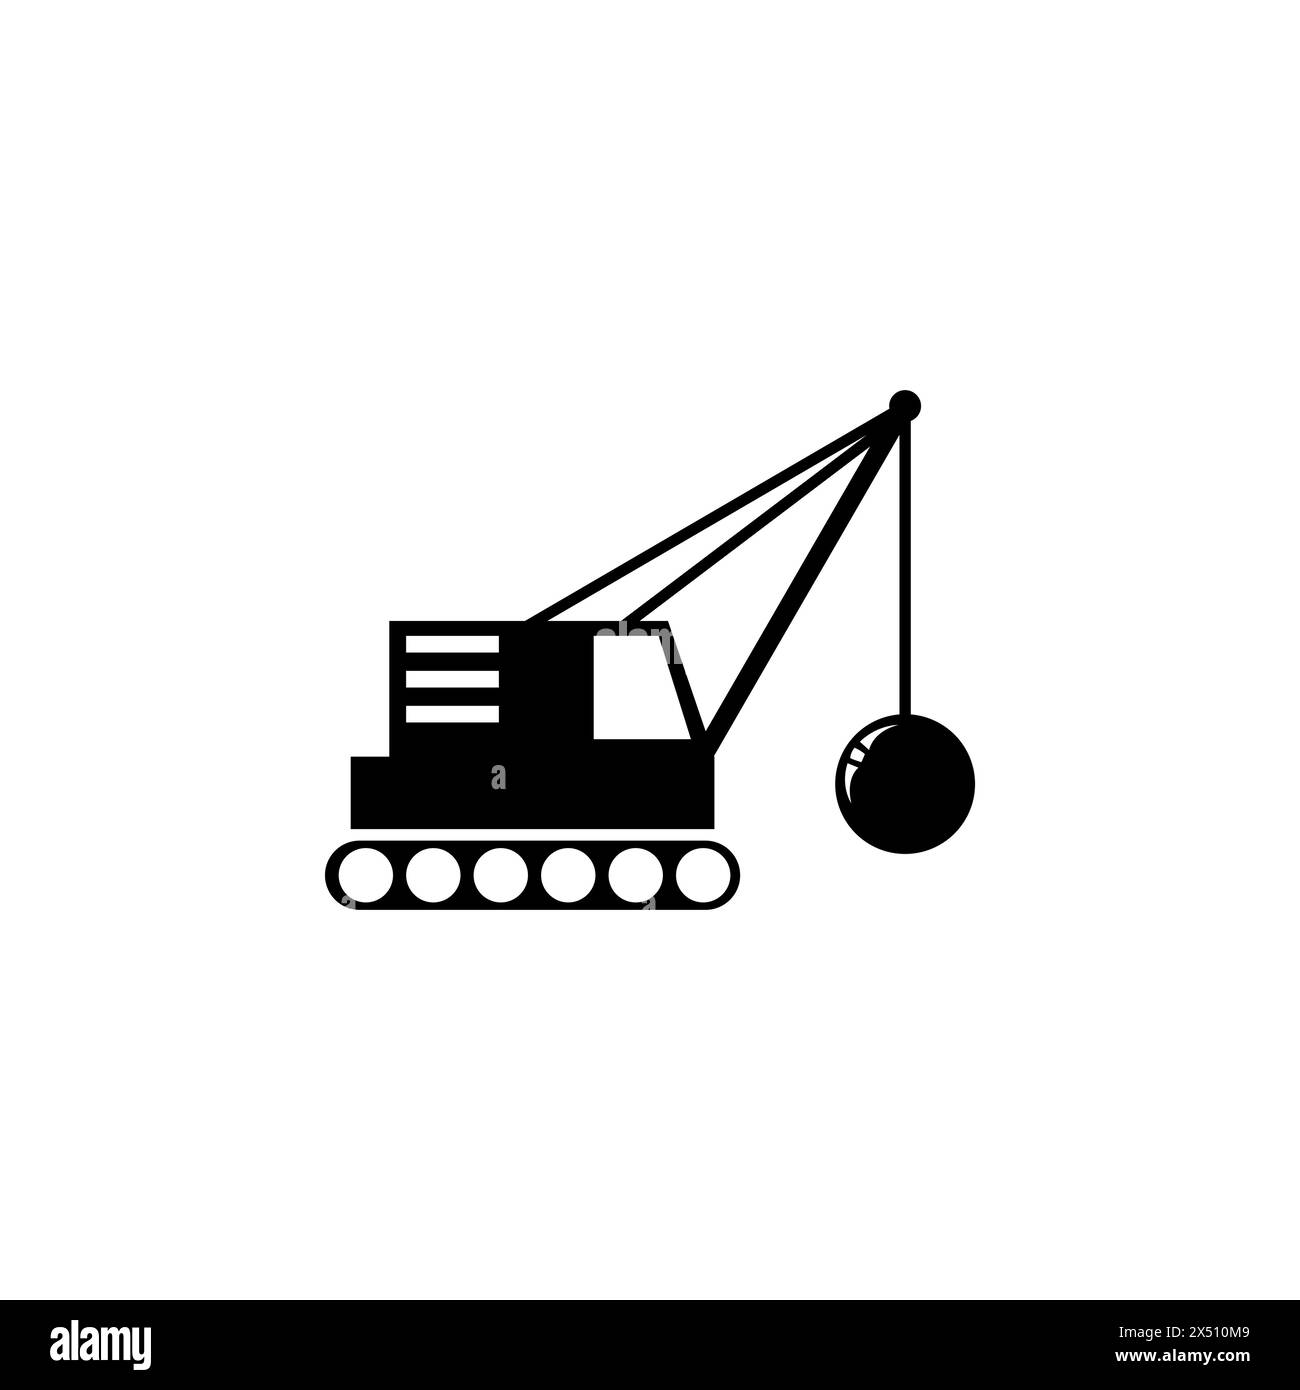 Demolition Building Machine, Crane with Wrecking Ball. Flat Vector Icon illustration Simple black symbol on white background. Demolition Ball Machine Stock Vector